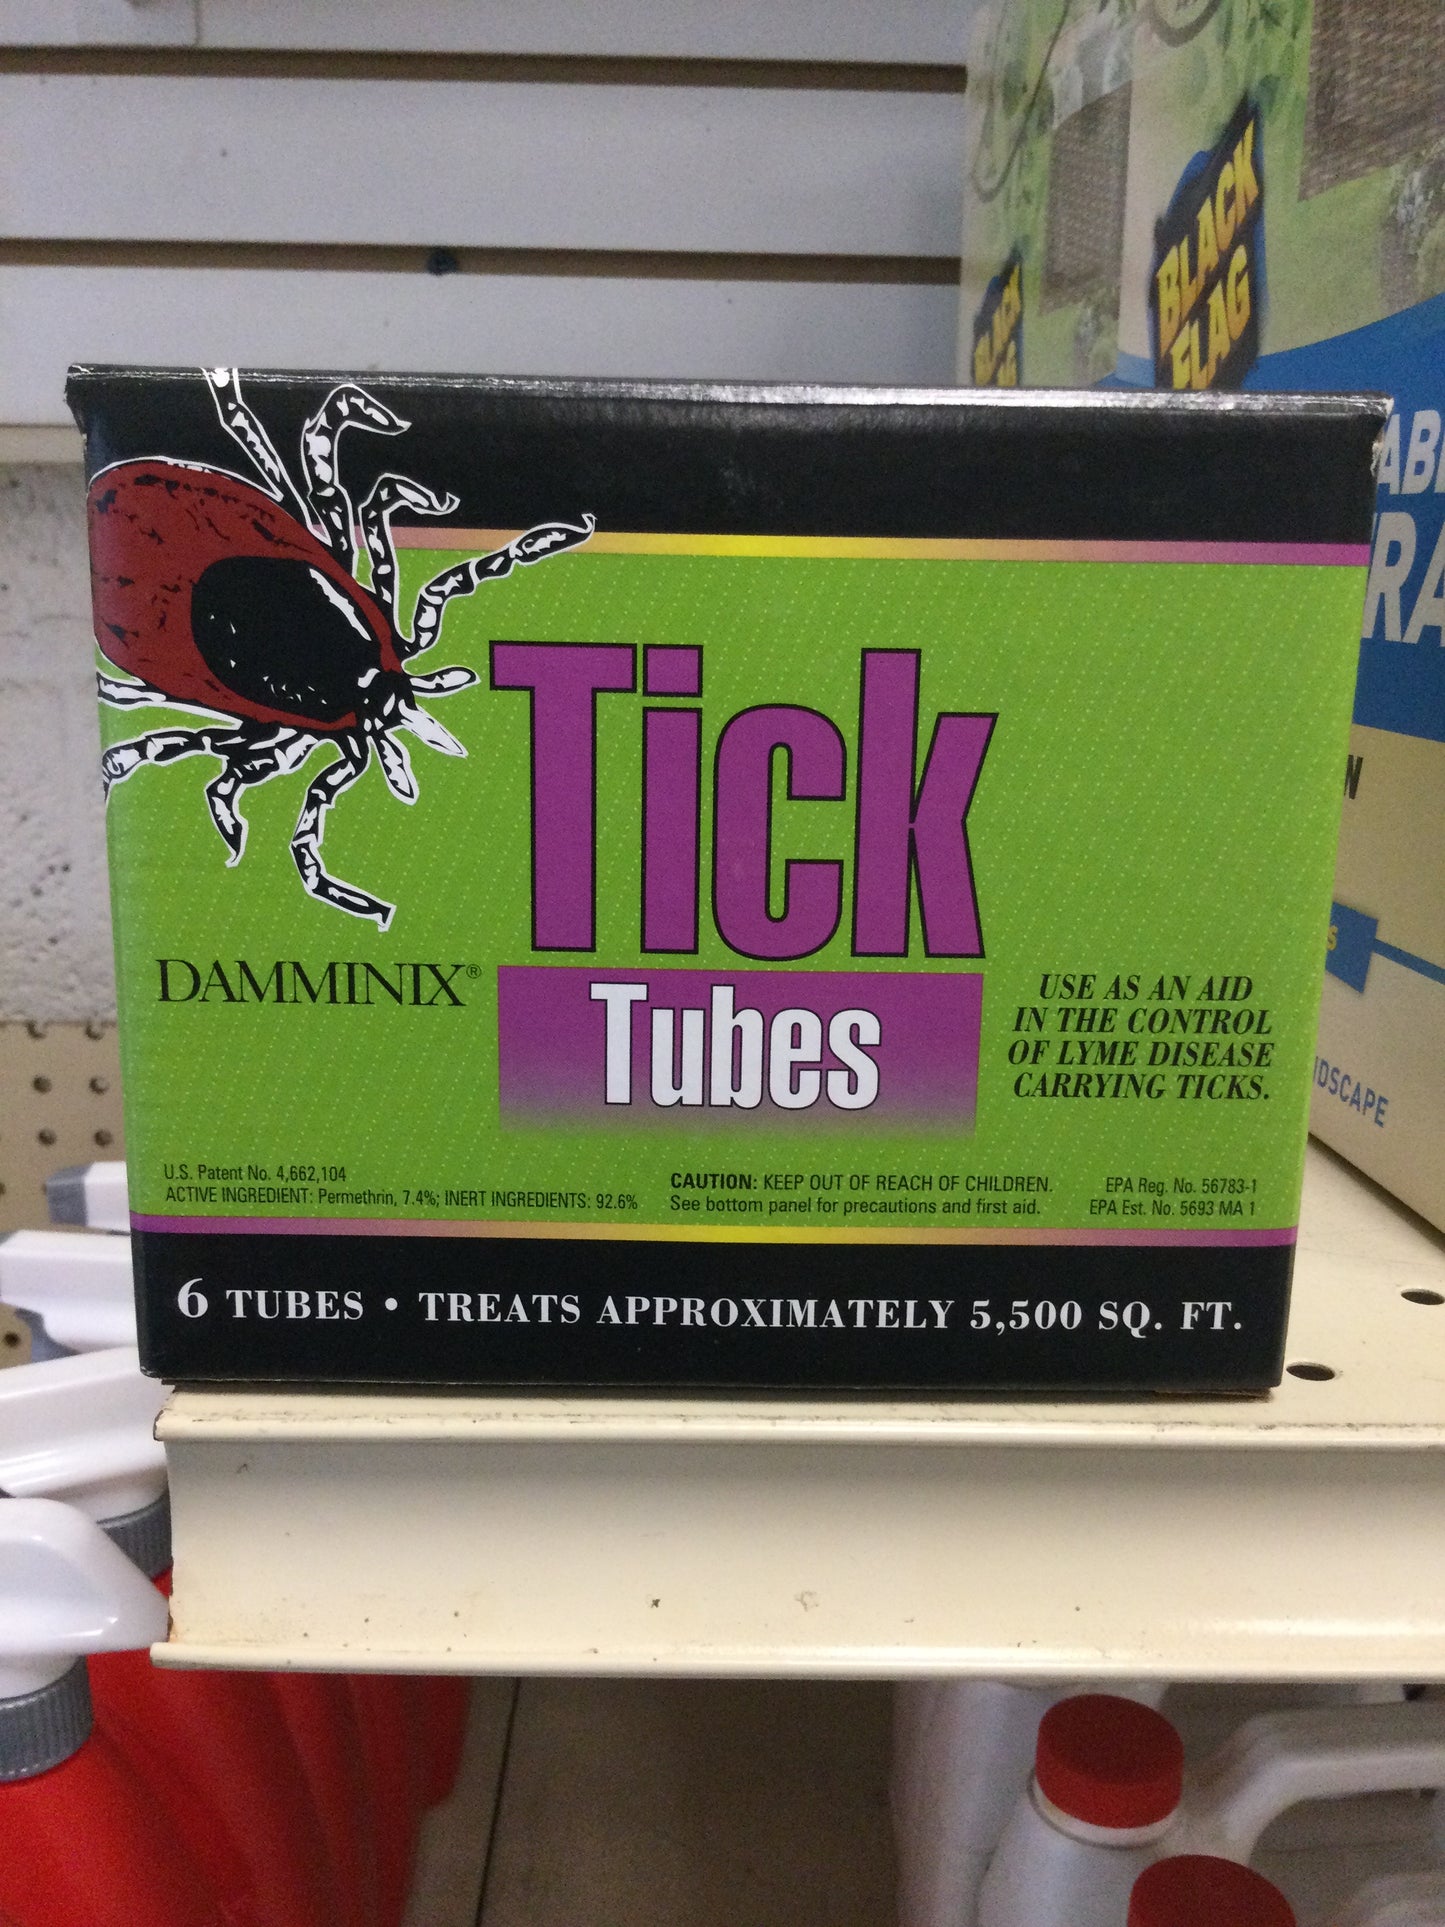 Tick Tubes